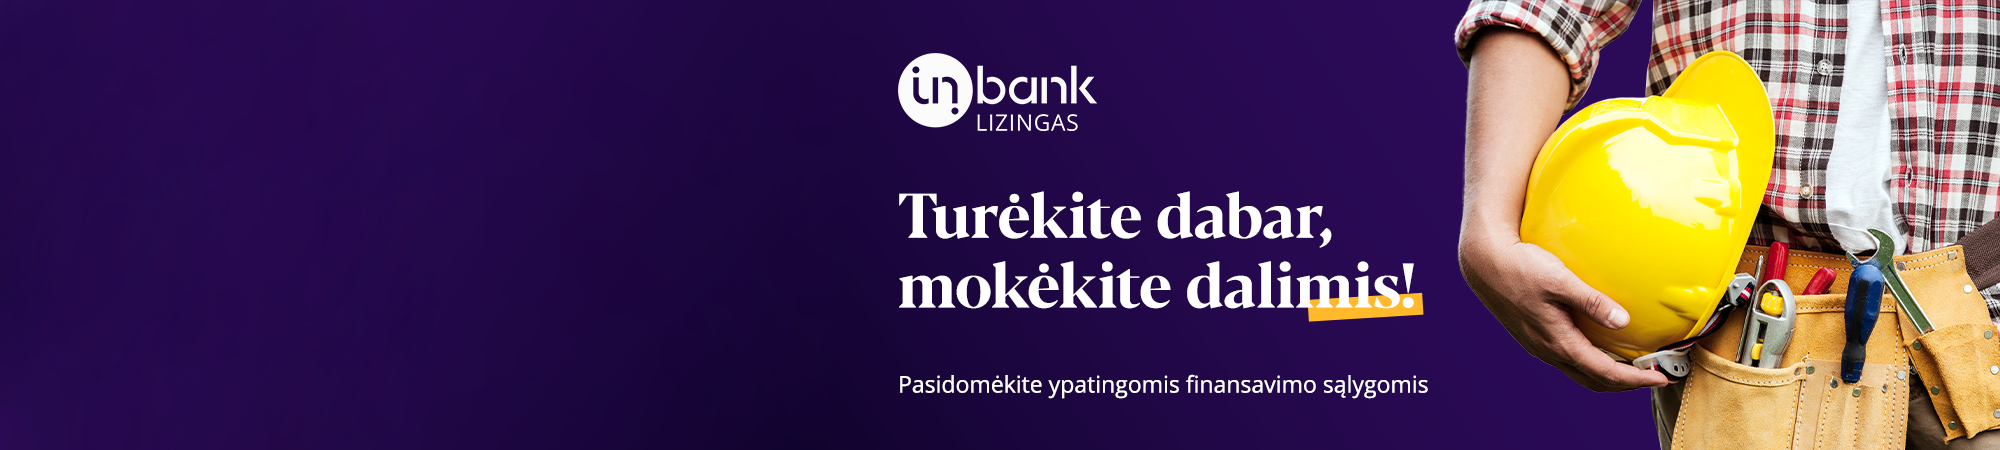 Inbank